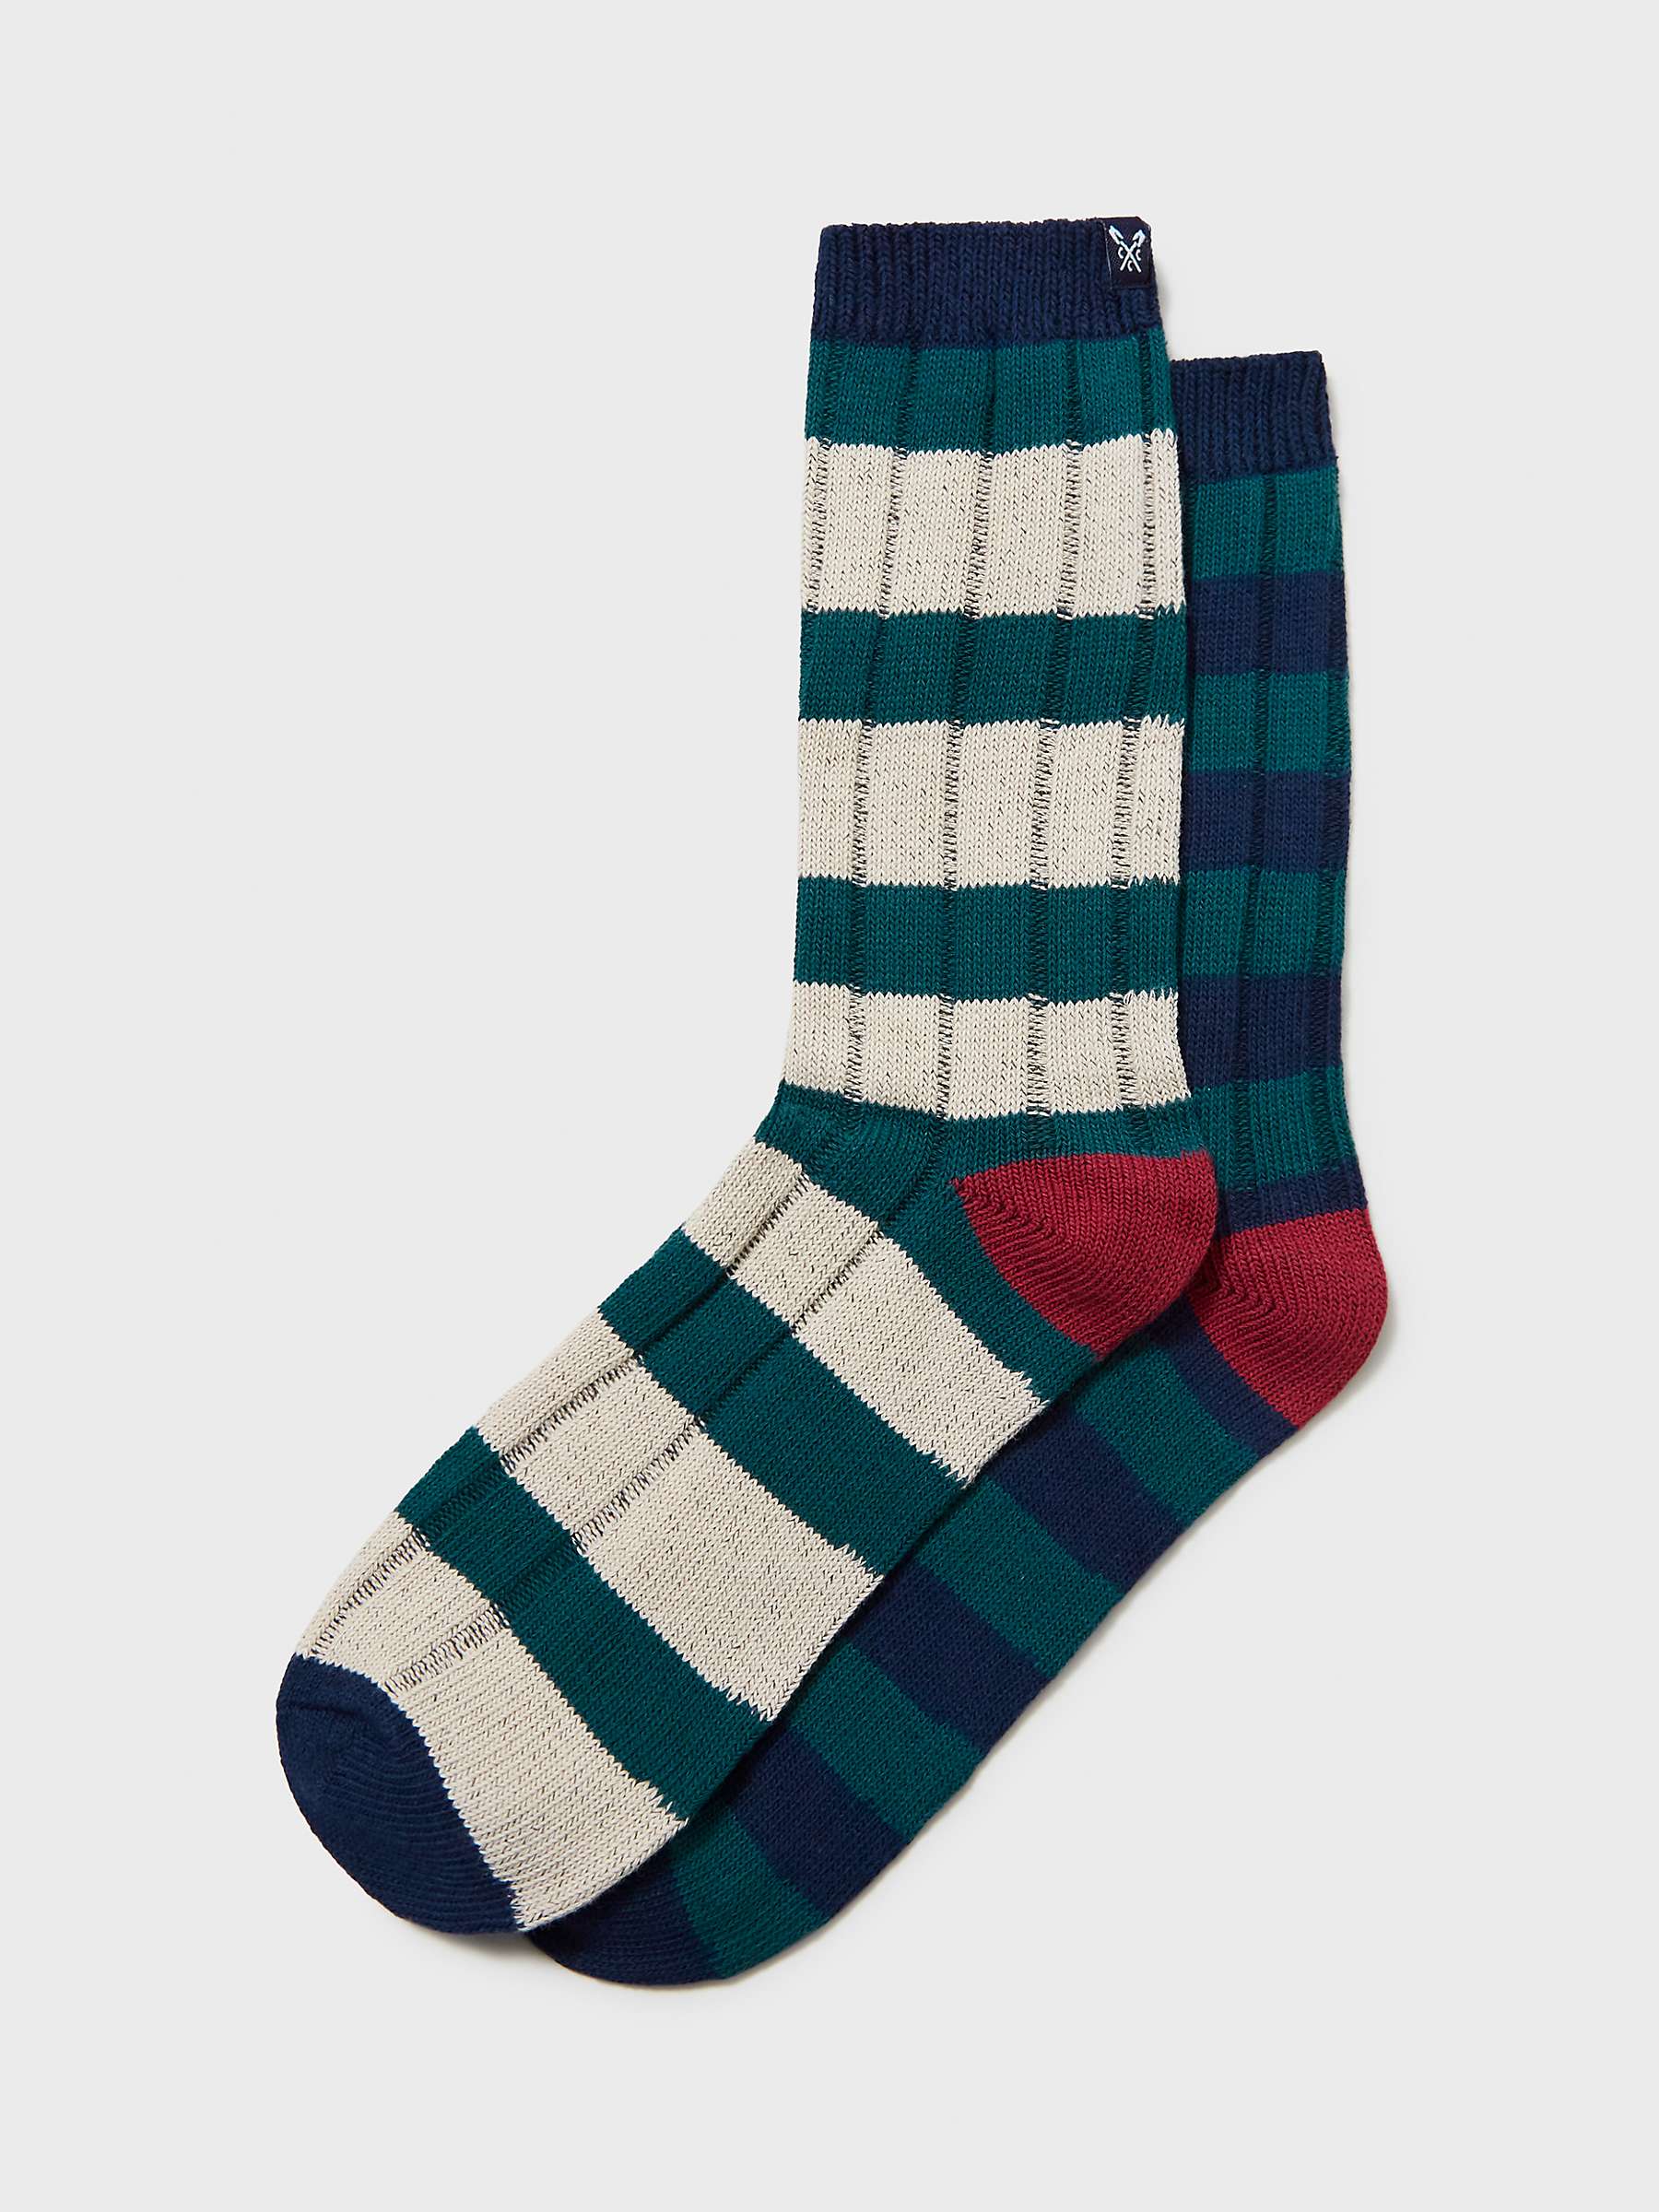 Buy Crew Clothing Stripey Rugby Socks, Pack of 2, Green/Multi Online at johnlewis.com